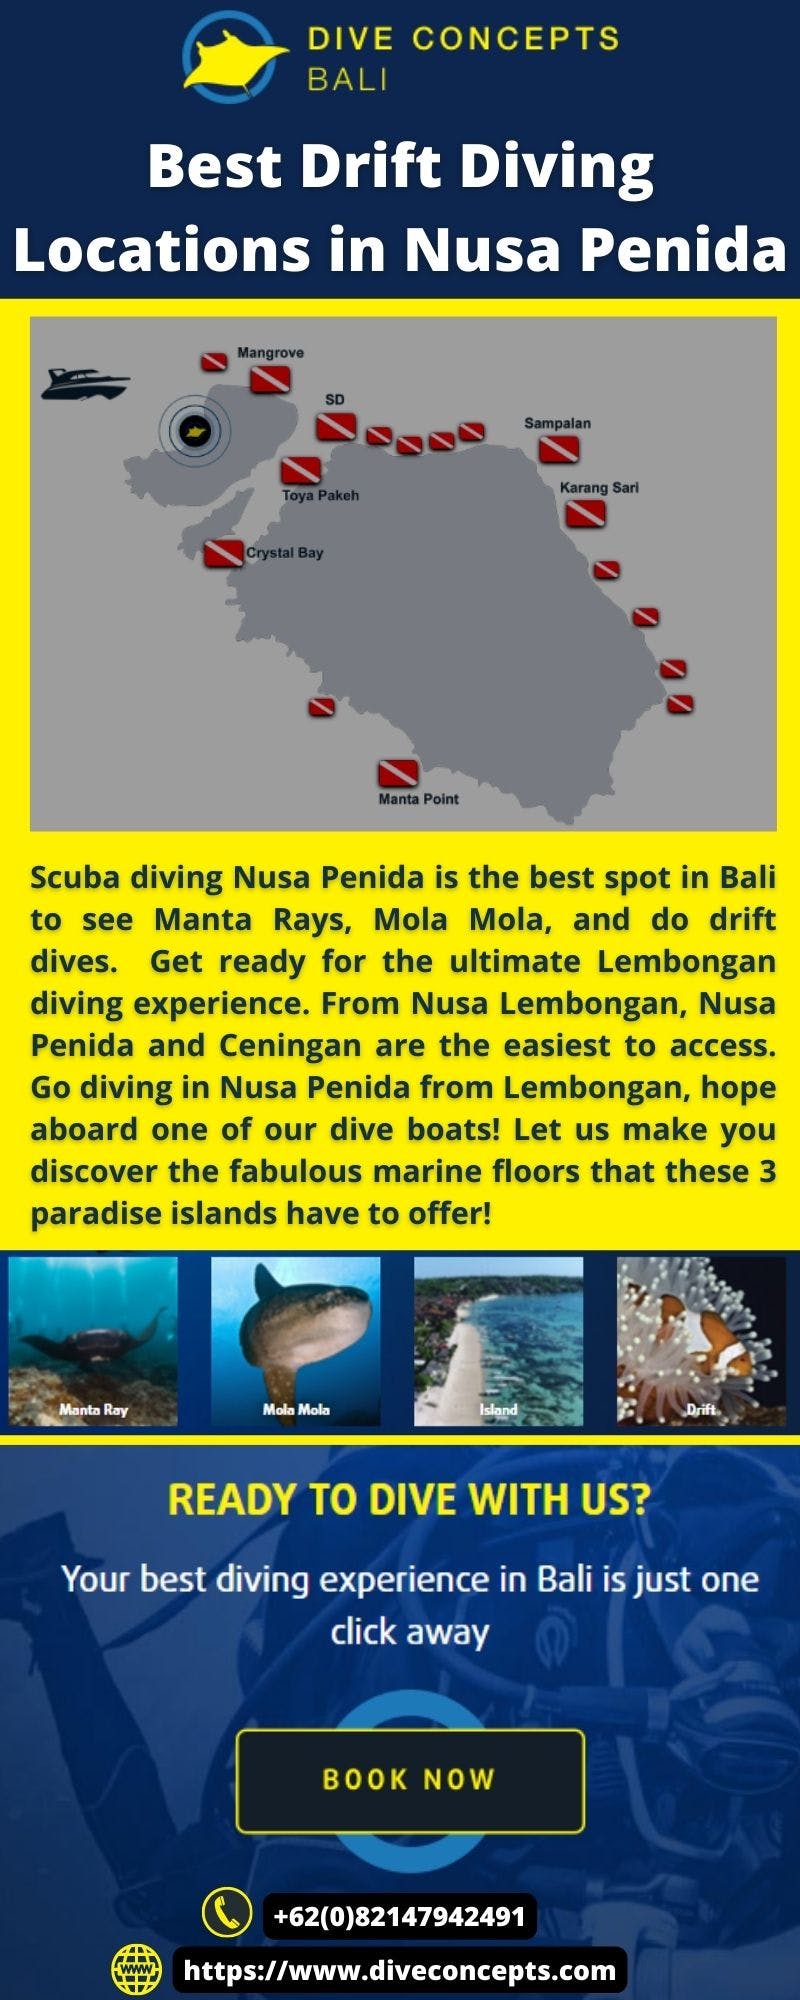 Best Drift Diving Locations in Nusa Penida.jpg